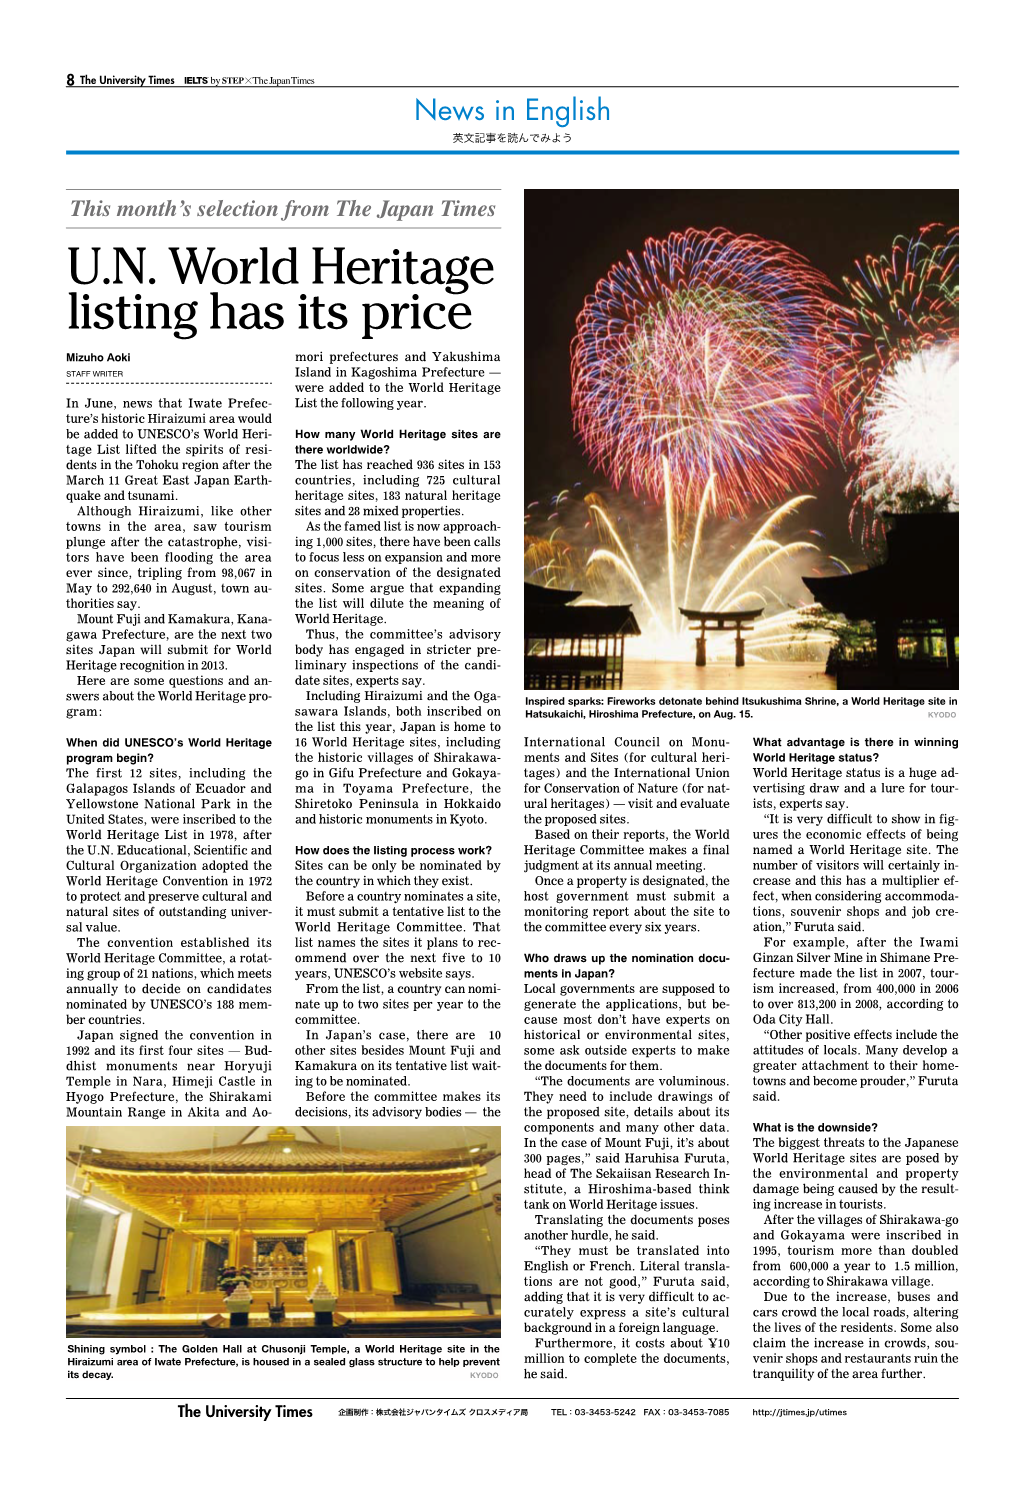 U.N. World Heritage Listing Has Its Price